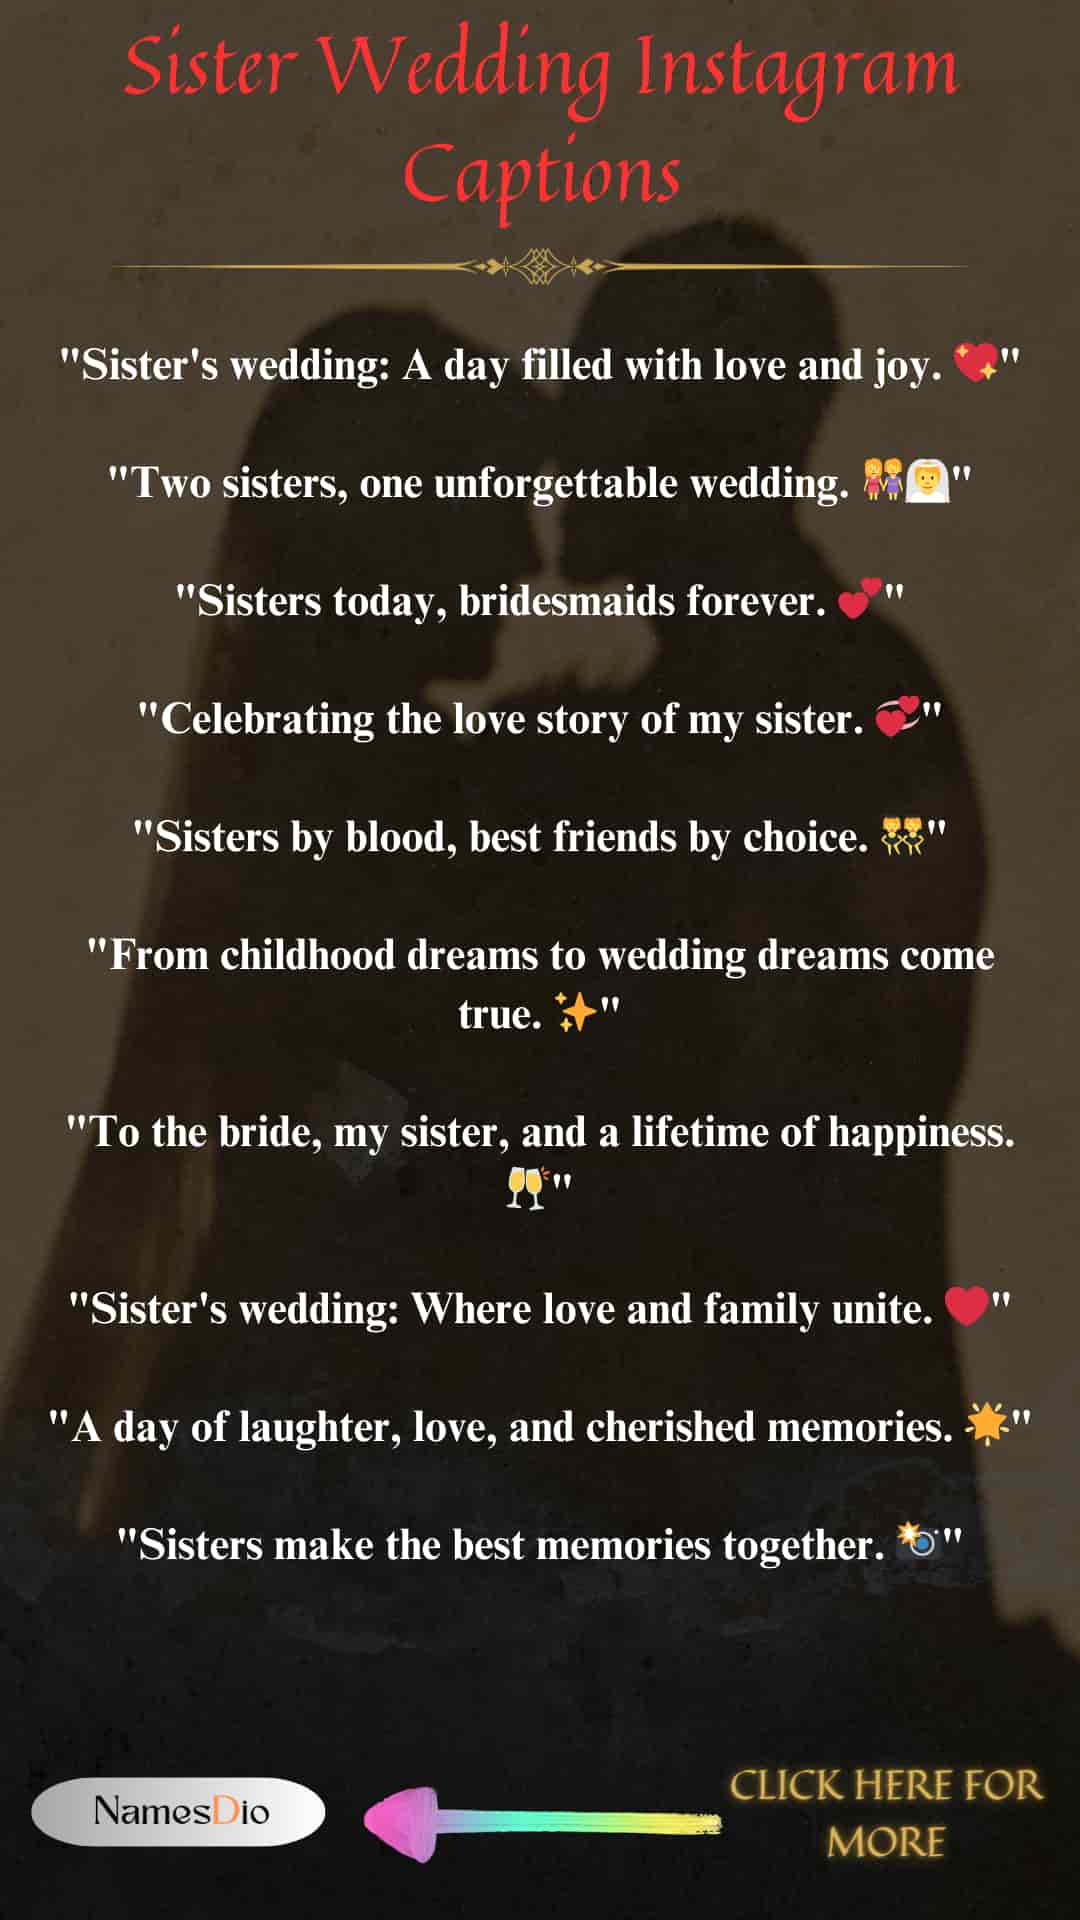 Sister-Wedding-Instagram-Captions